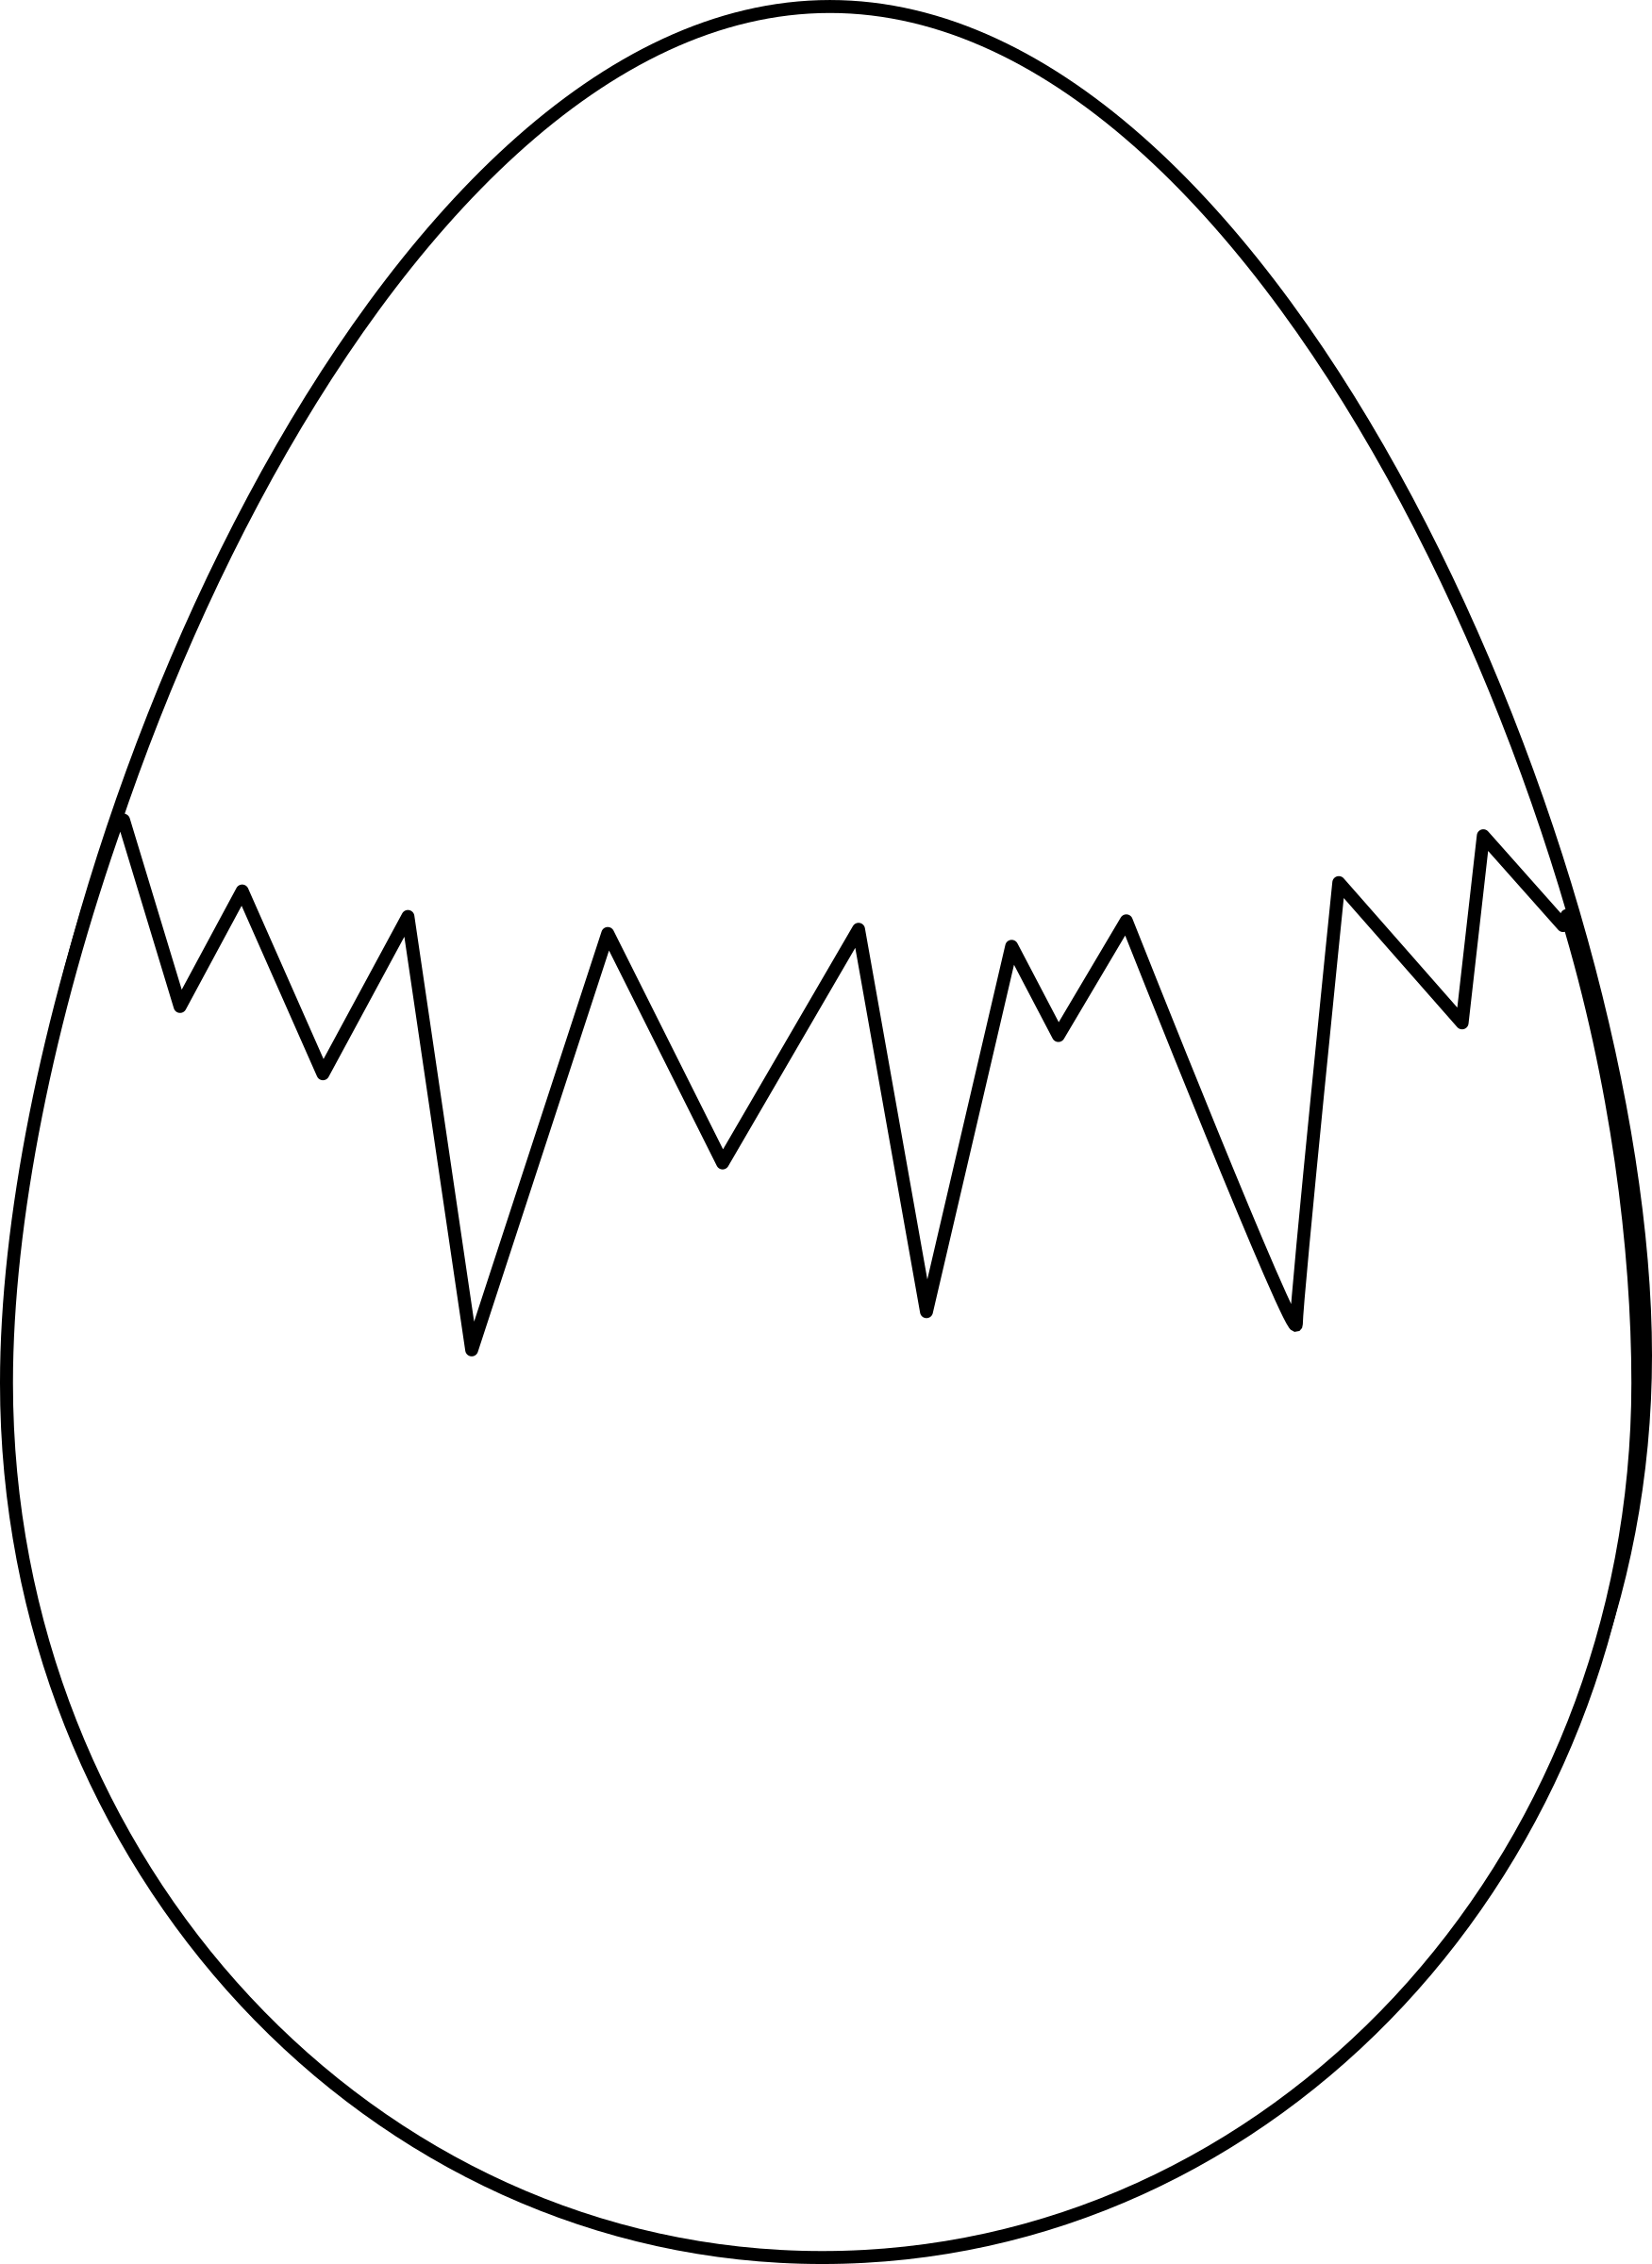 Яйцо раскраска. Яйцо раскраска для детей. Раскраски пасочных яиц. Пасхальное яйцо раскраска. Распечатать раскраску яйца